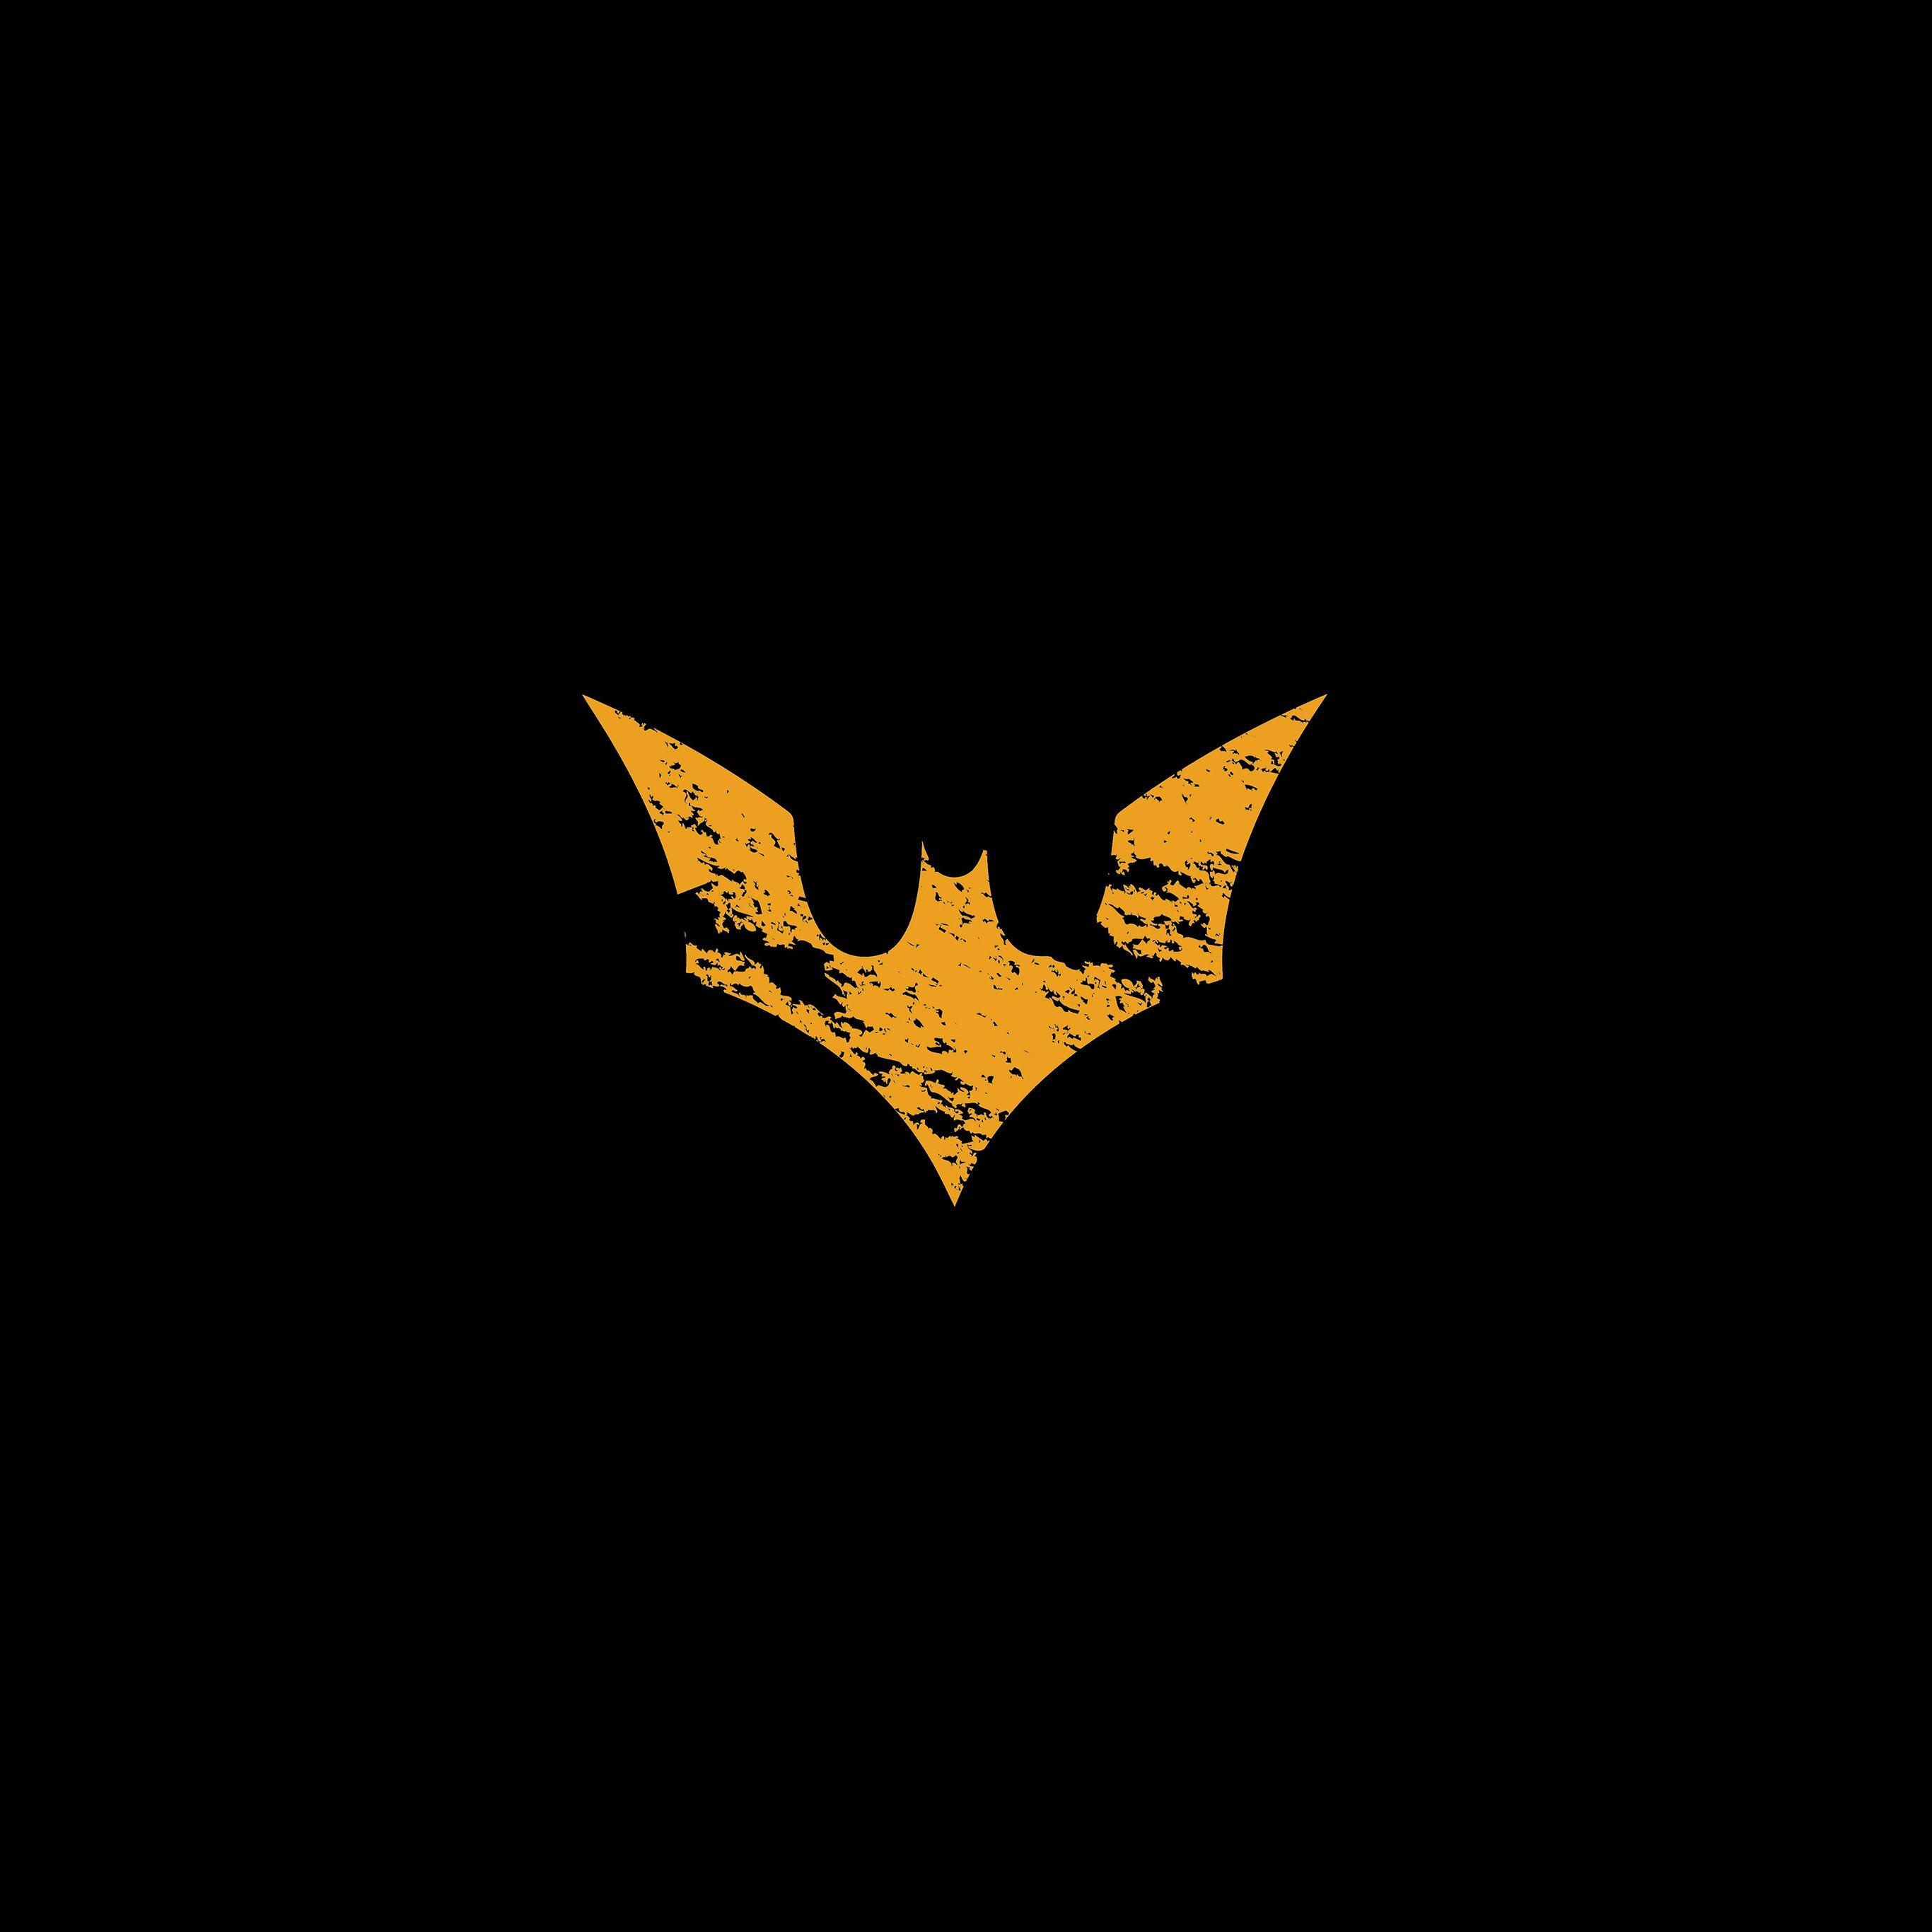 Batman Yellow Logo - Androidpapers.co. Android wallpaper. batman logo yellow dark